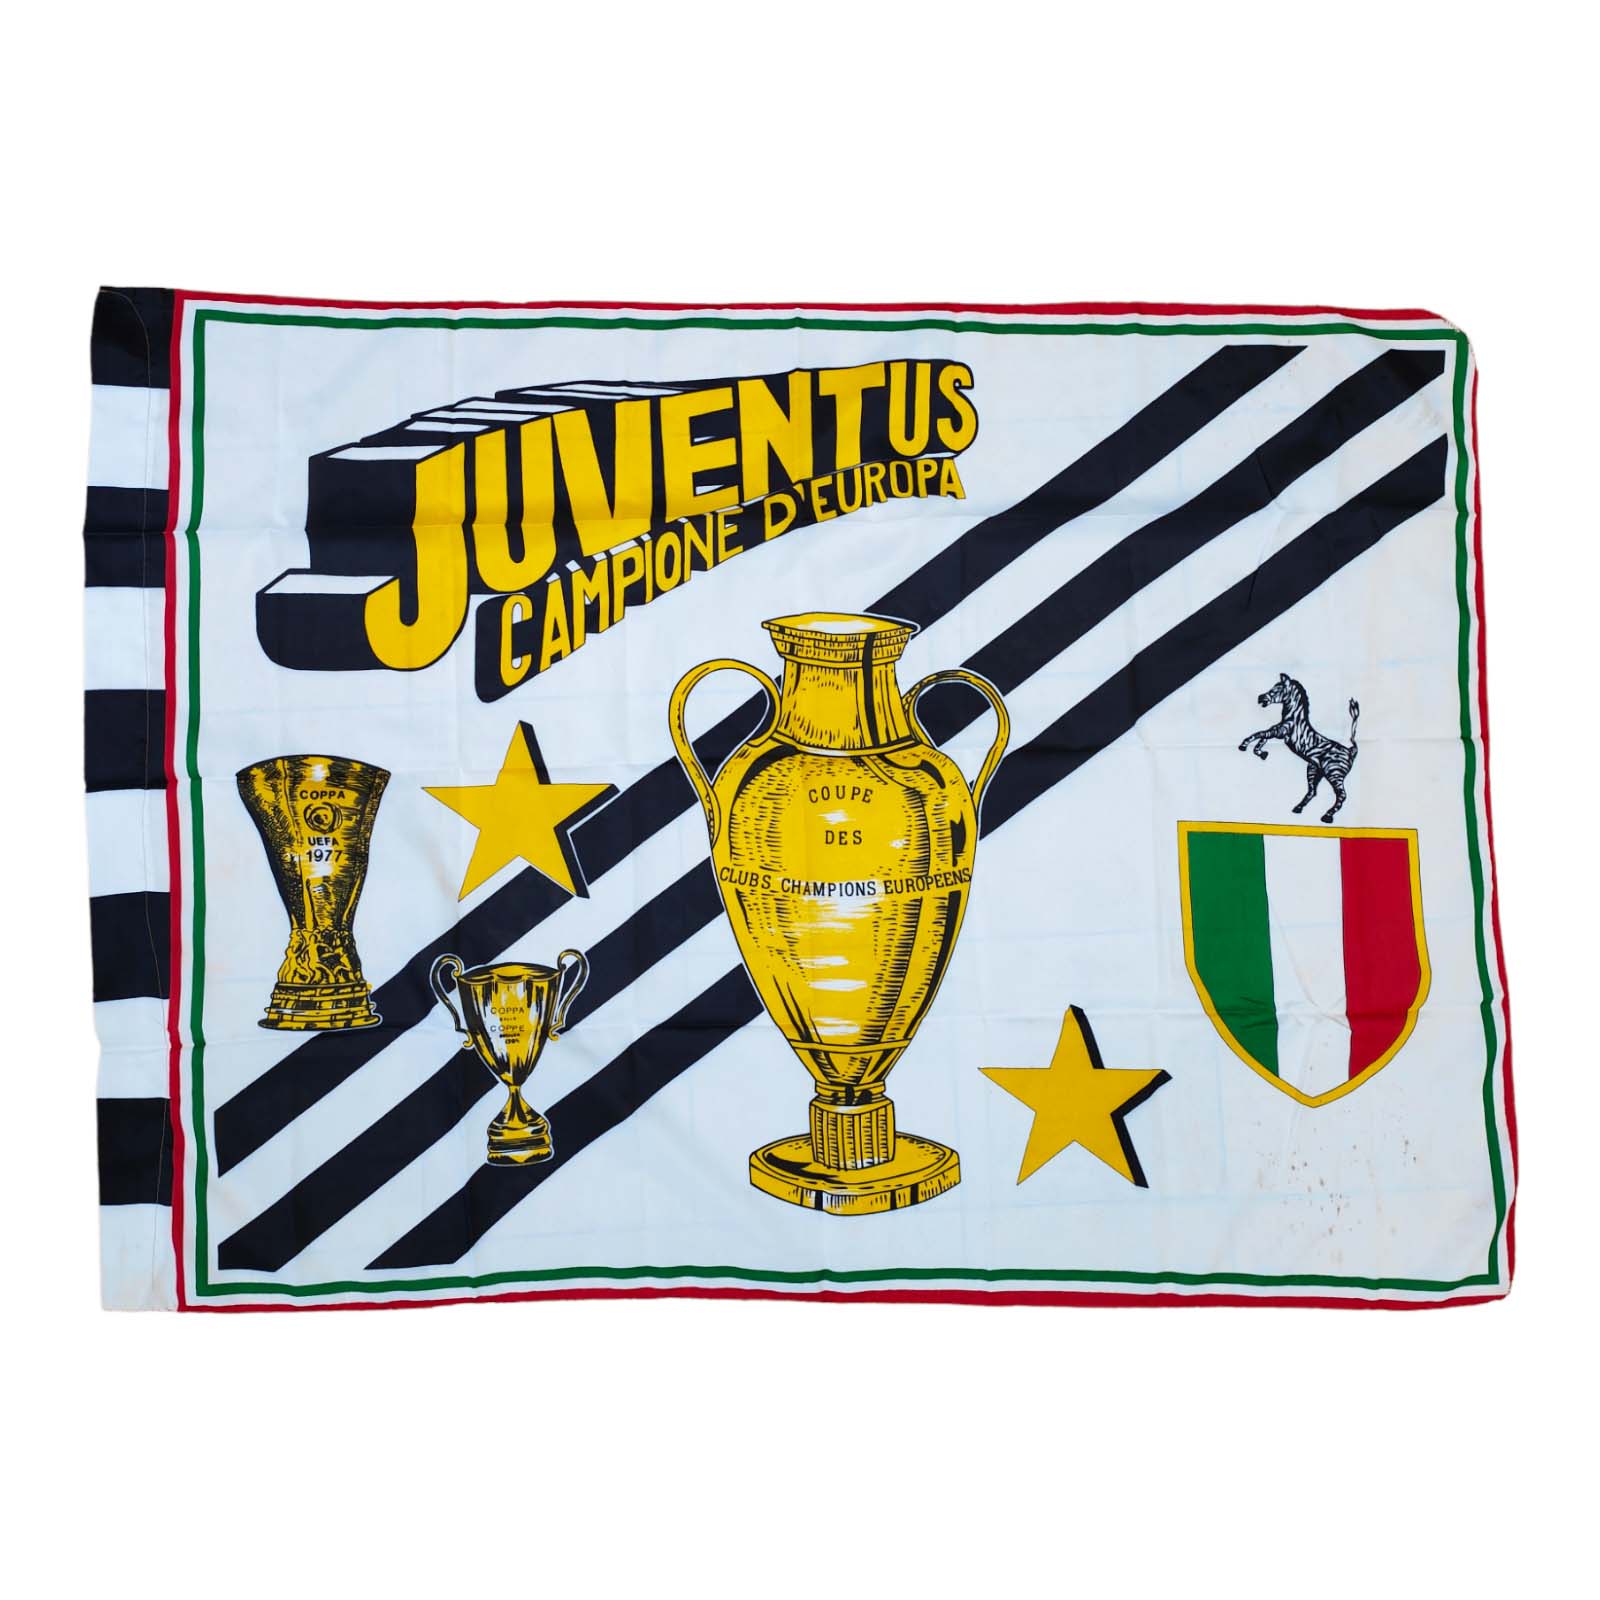 Juventus bandiera 1984-85 Champions League » BOLA Football Store